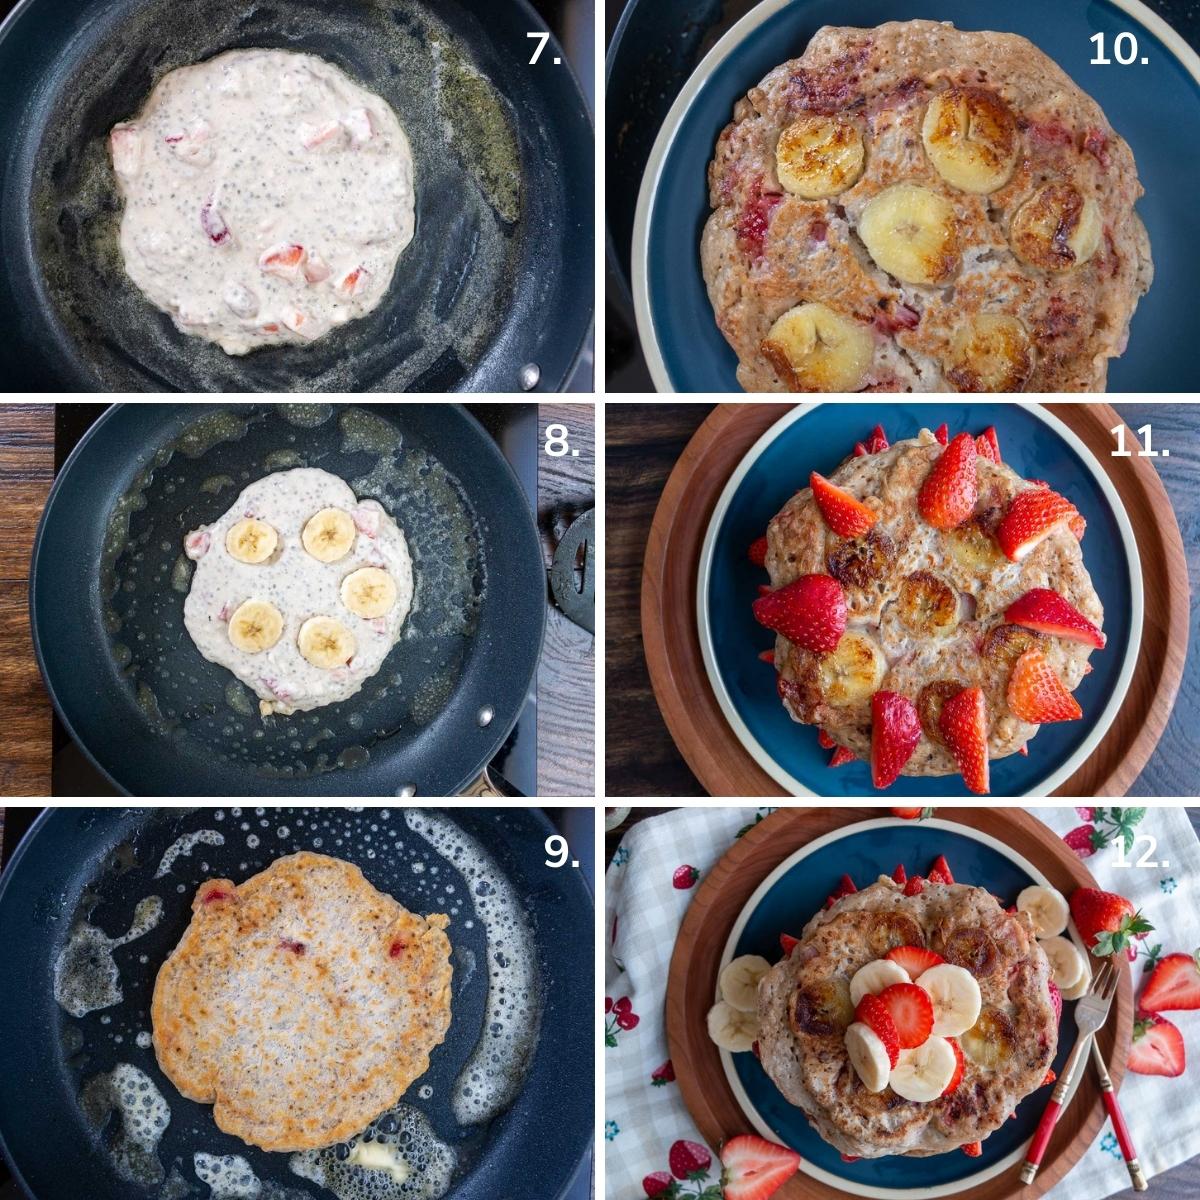 https://www.hwcmagazine.com/wp-content/uploads/2016/04/cook-pancakes.jpg